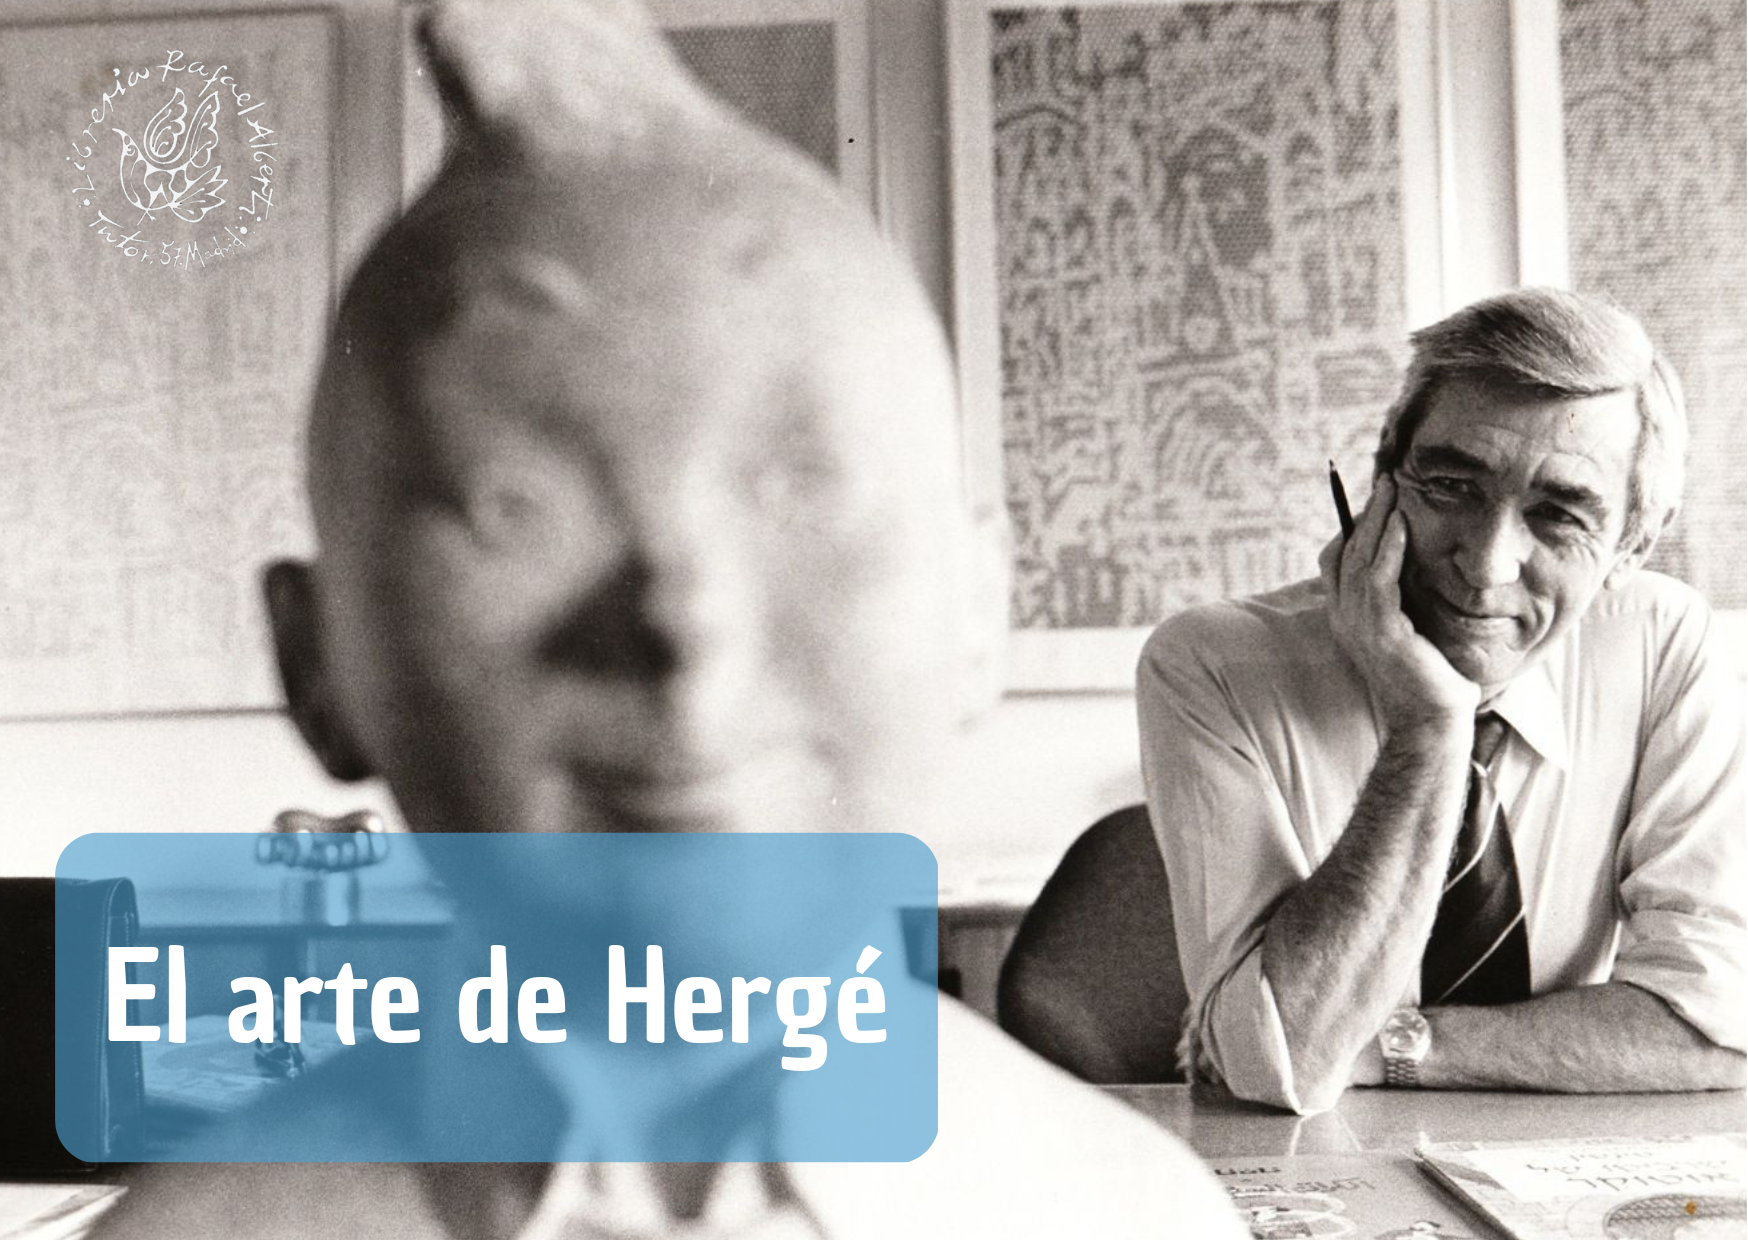 El arte de Hergé